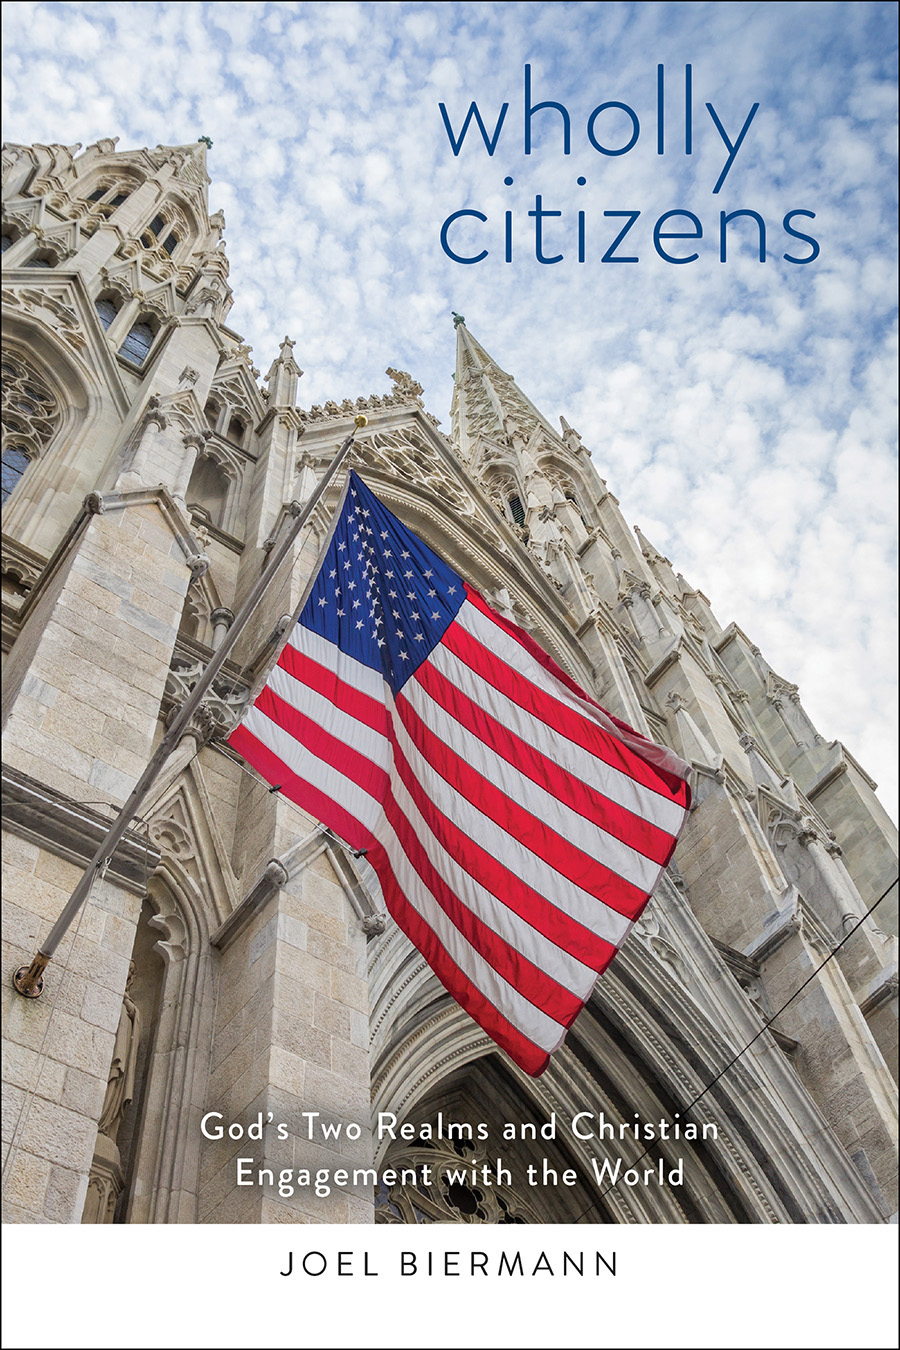 Book Blurbs: Joel Biermann on how Christians engage politics and culture